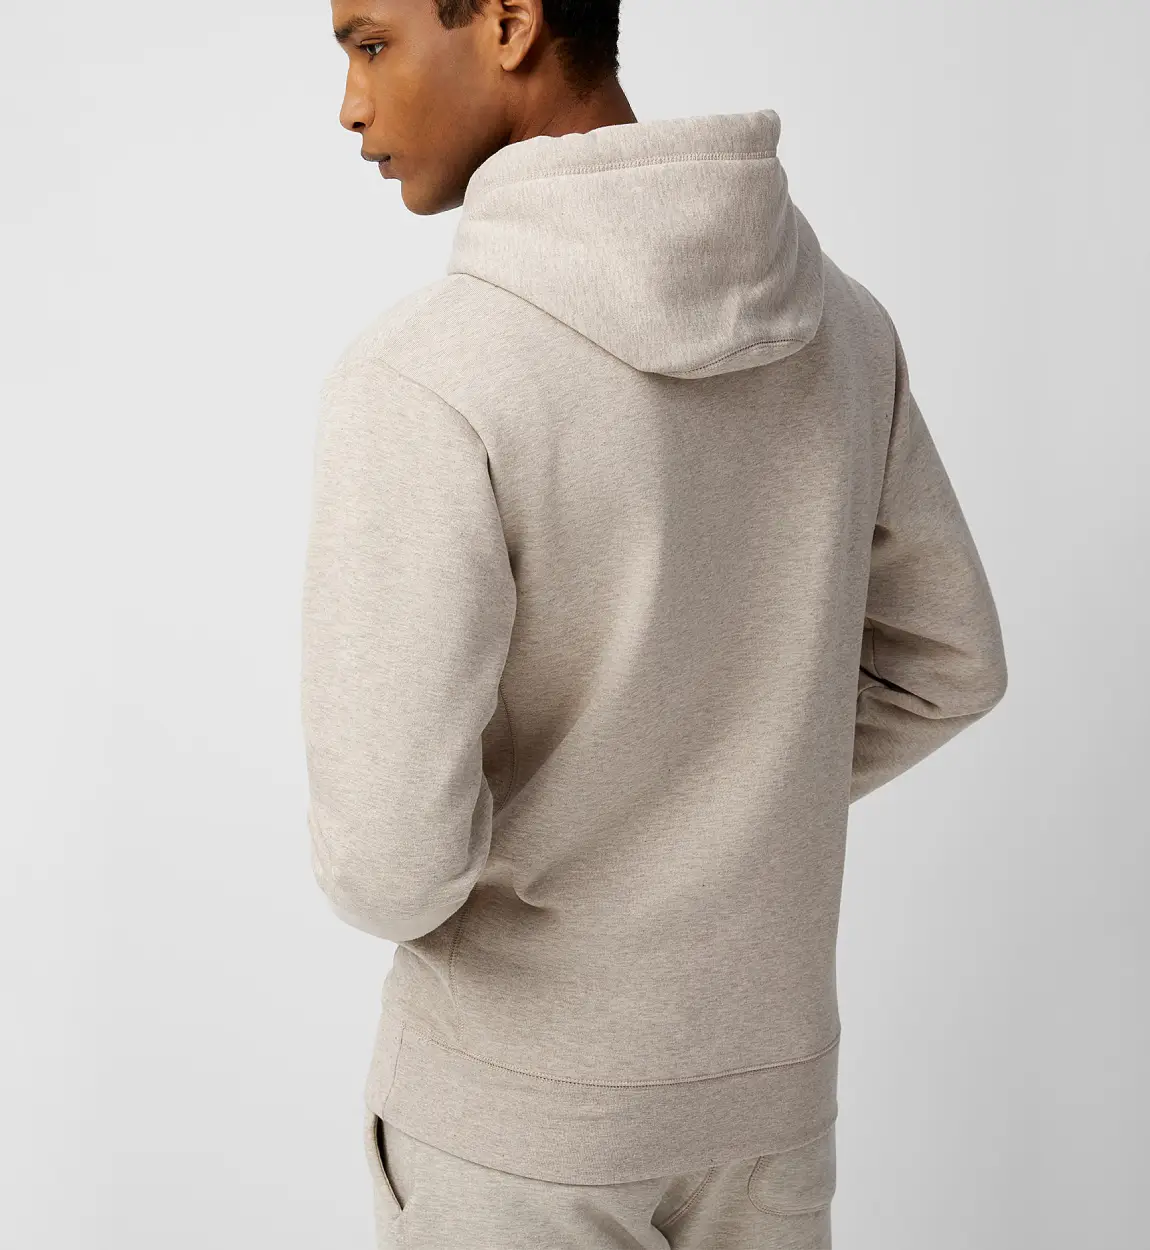 Tendon Minimalist Fleece hoodie